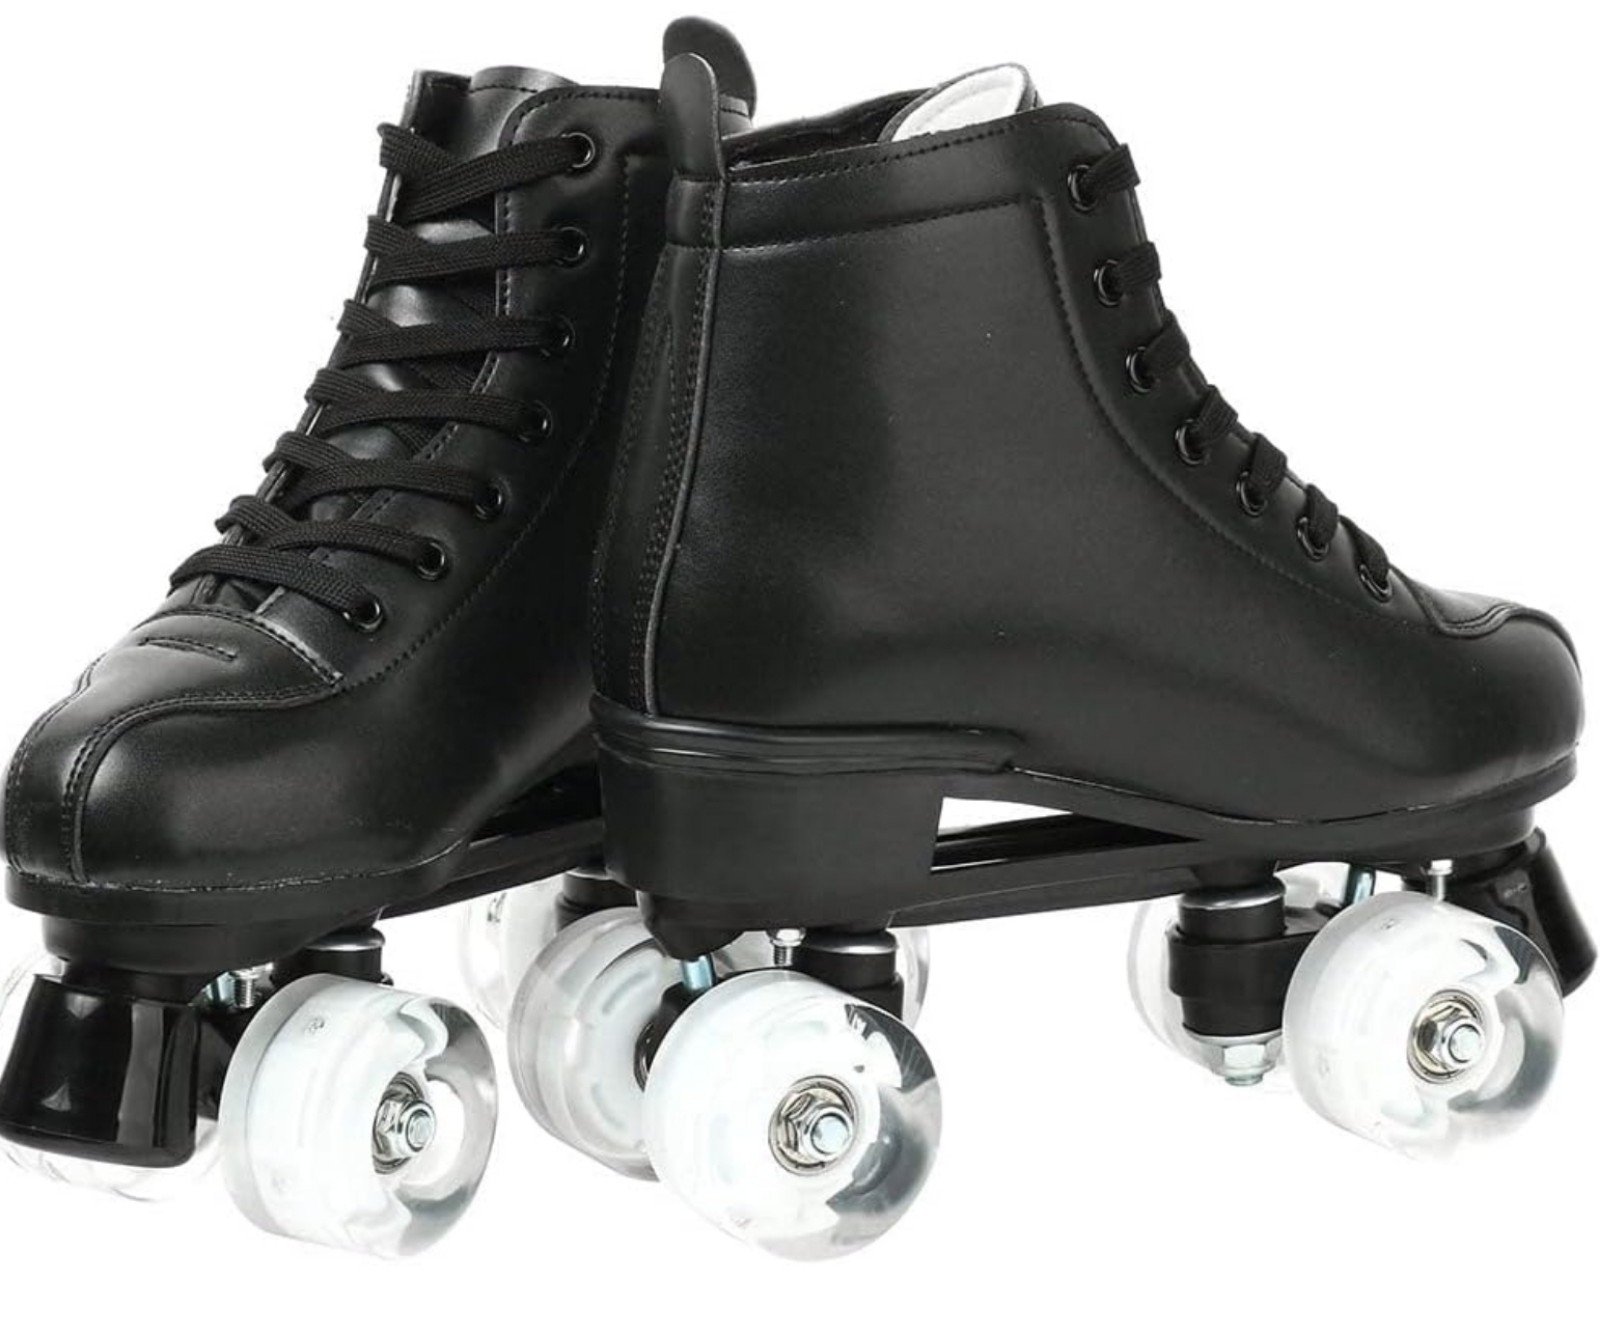 Skates w Disco light up wheels size MEN 9 WOMEN 10.5 FWc8zHv25